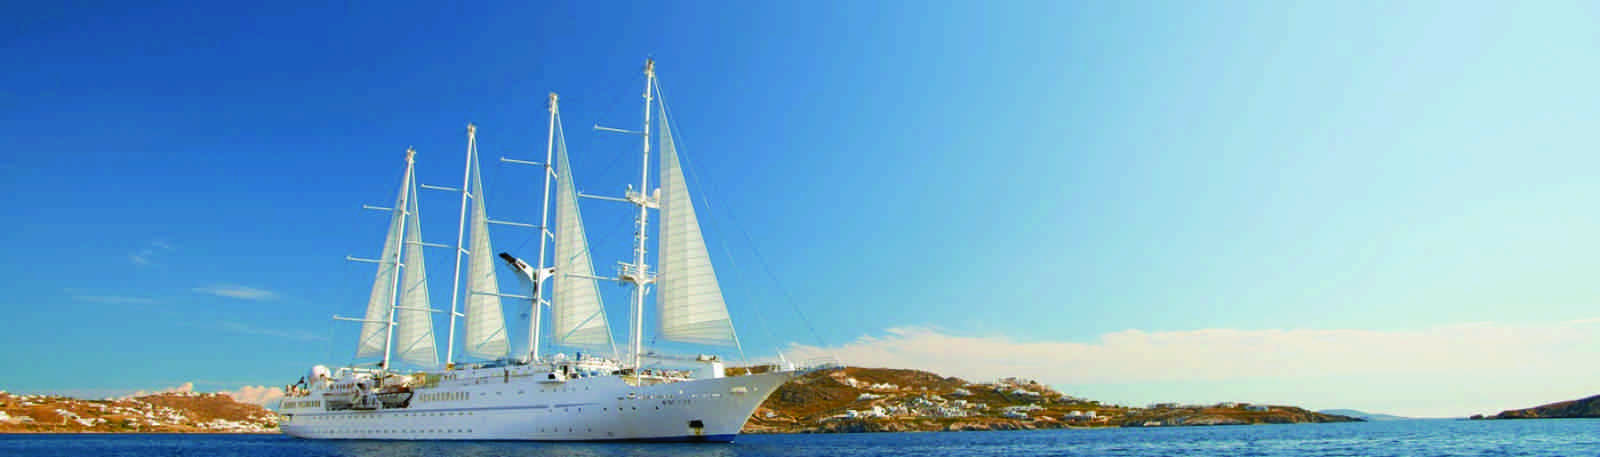 Windstar Cruises-wind-spirit